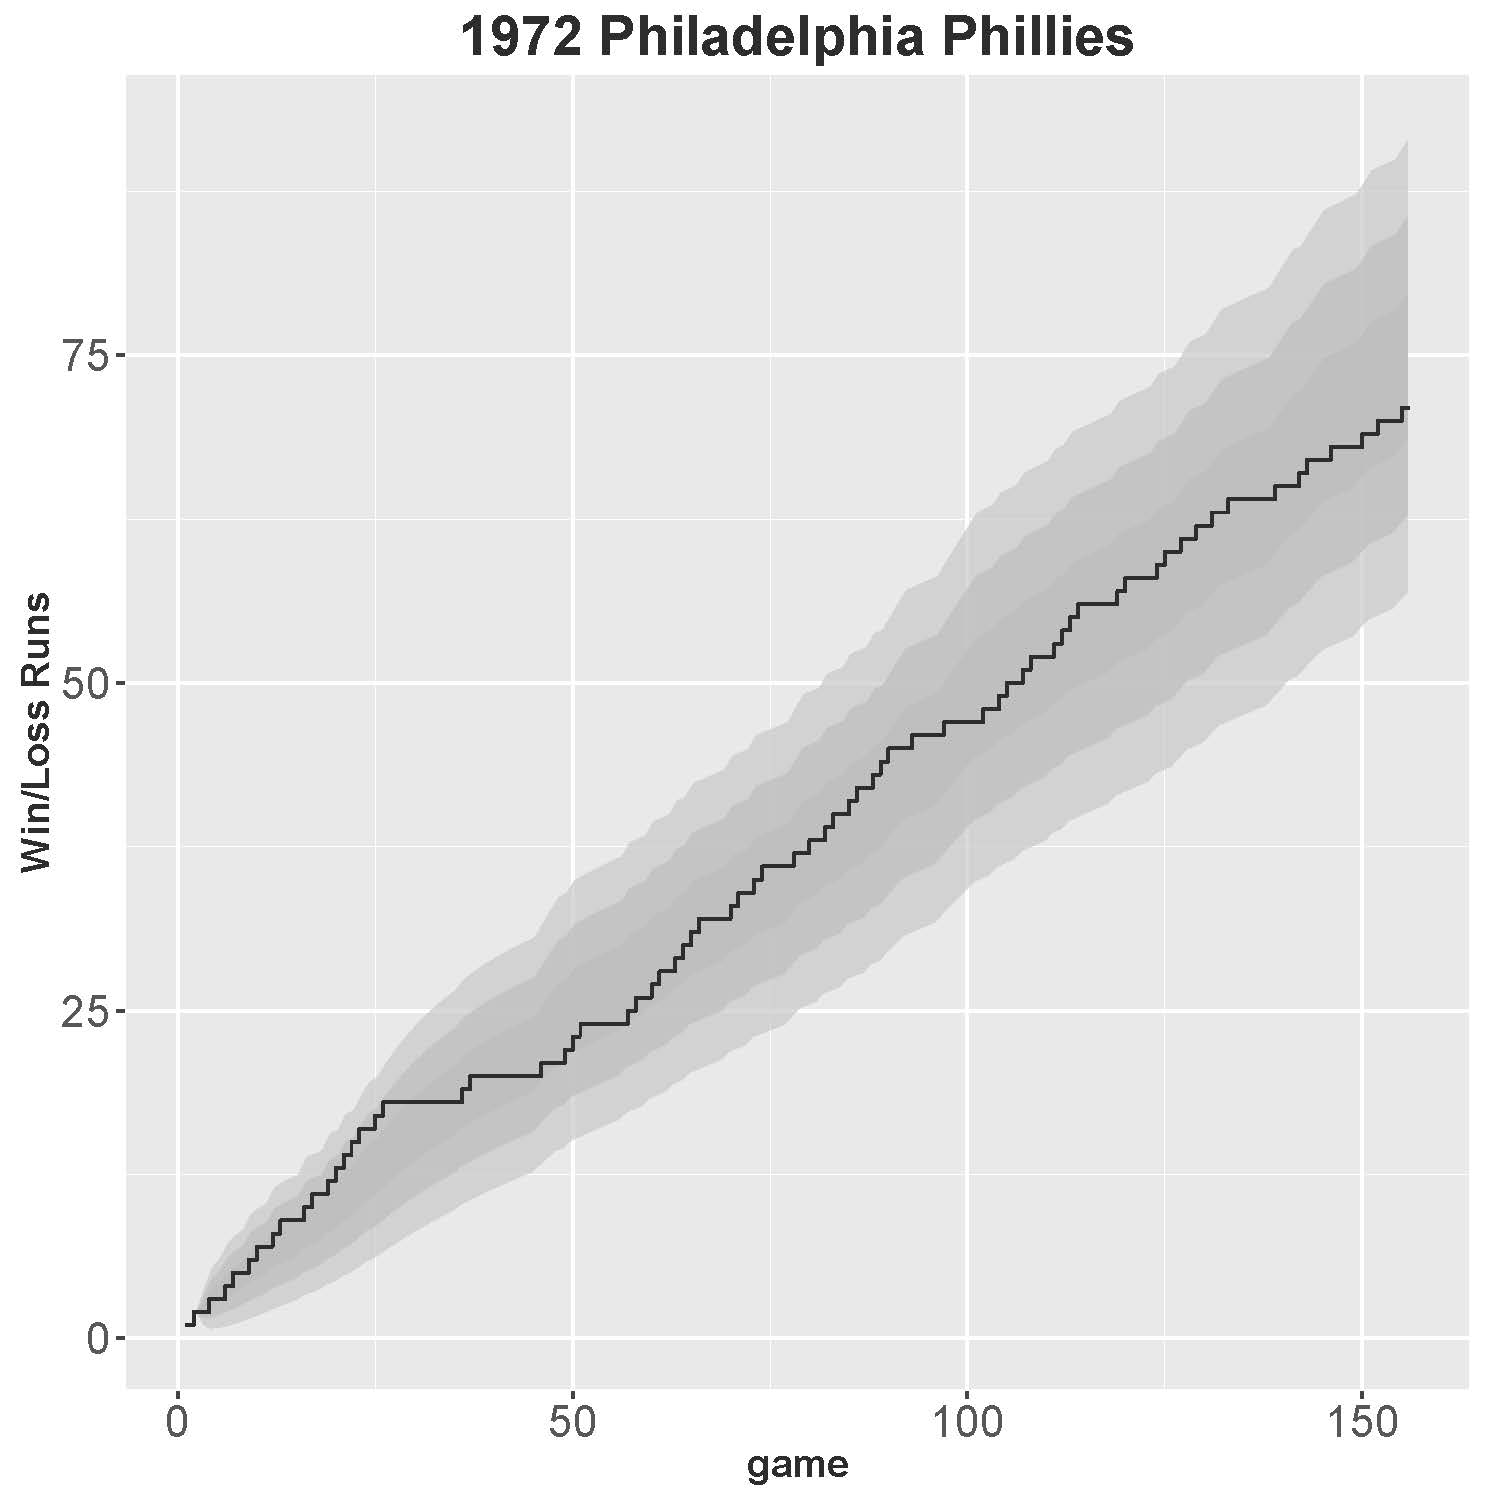 Figure 1: 1972 Phillies